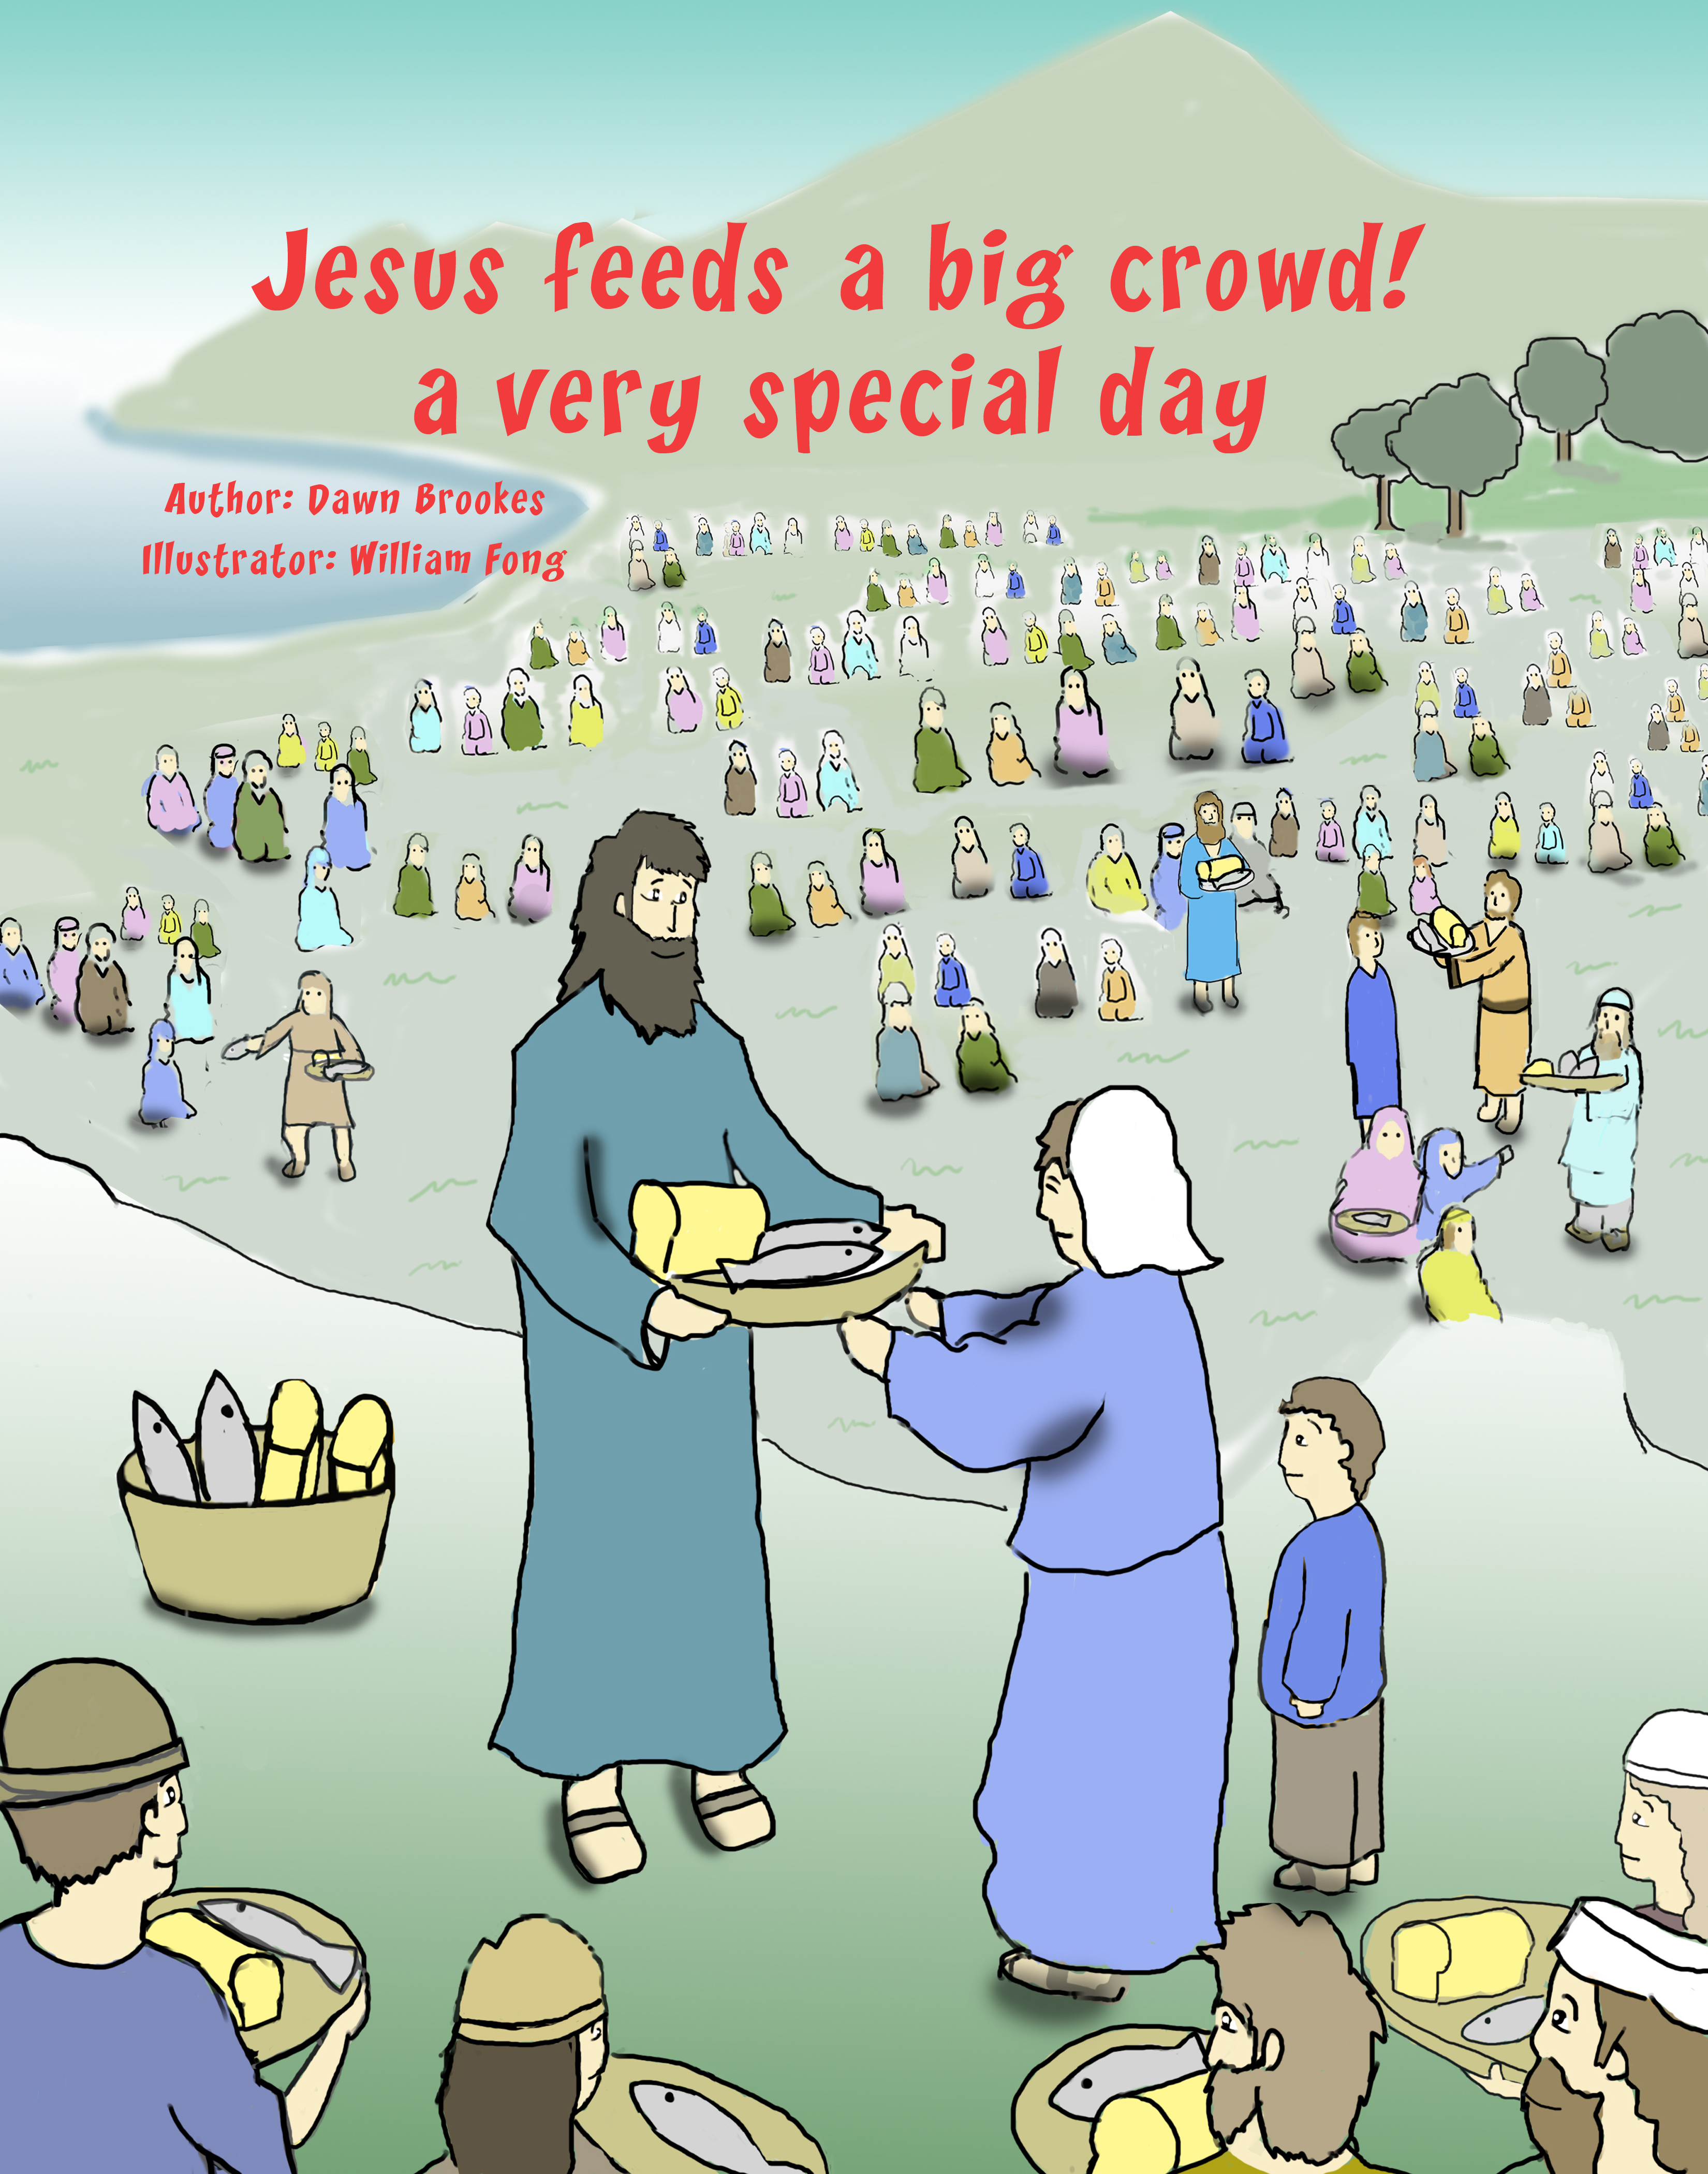 Jesus feeds 5,000